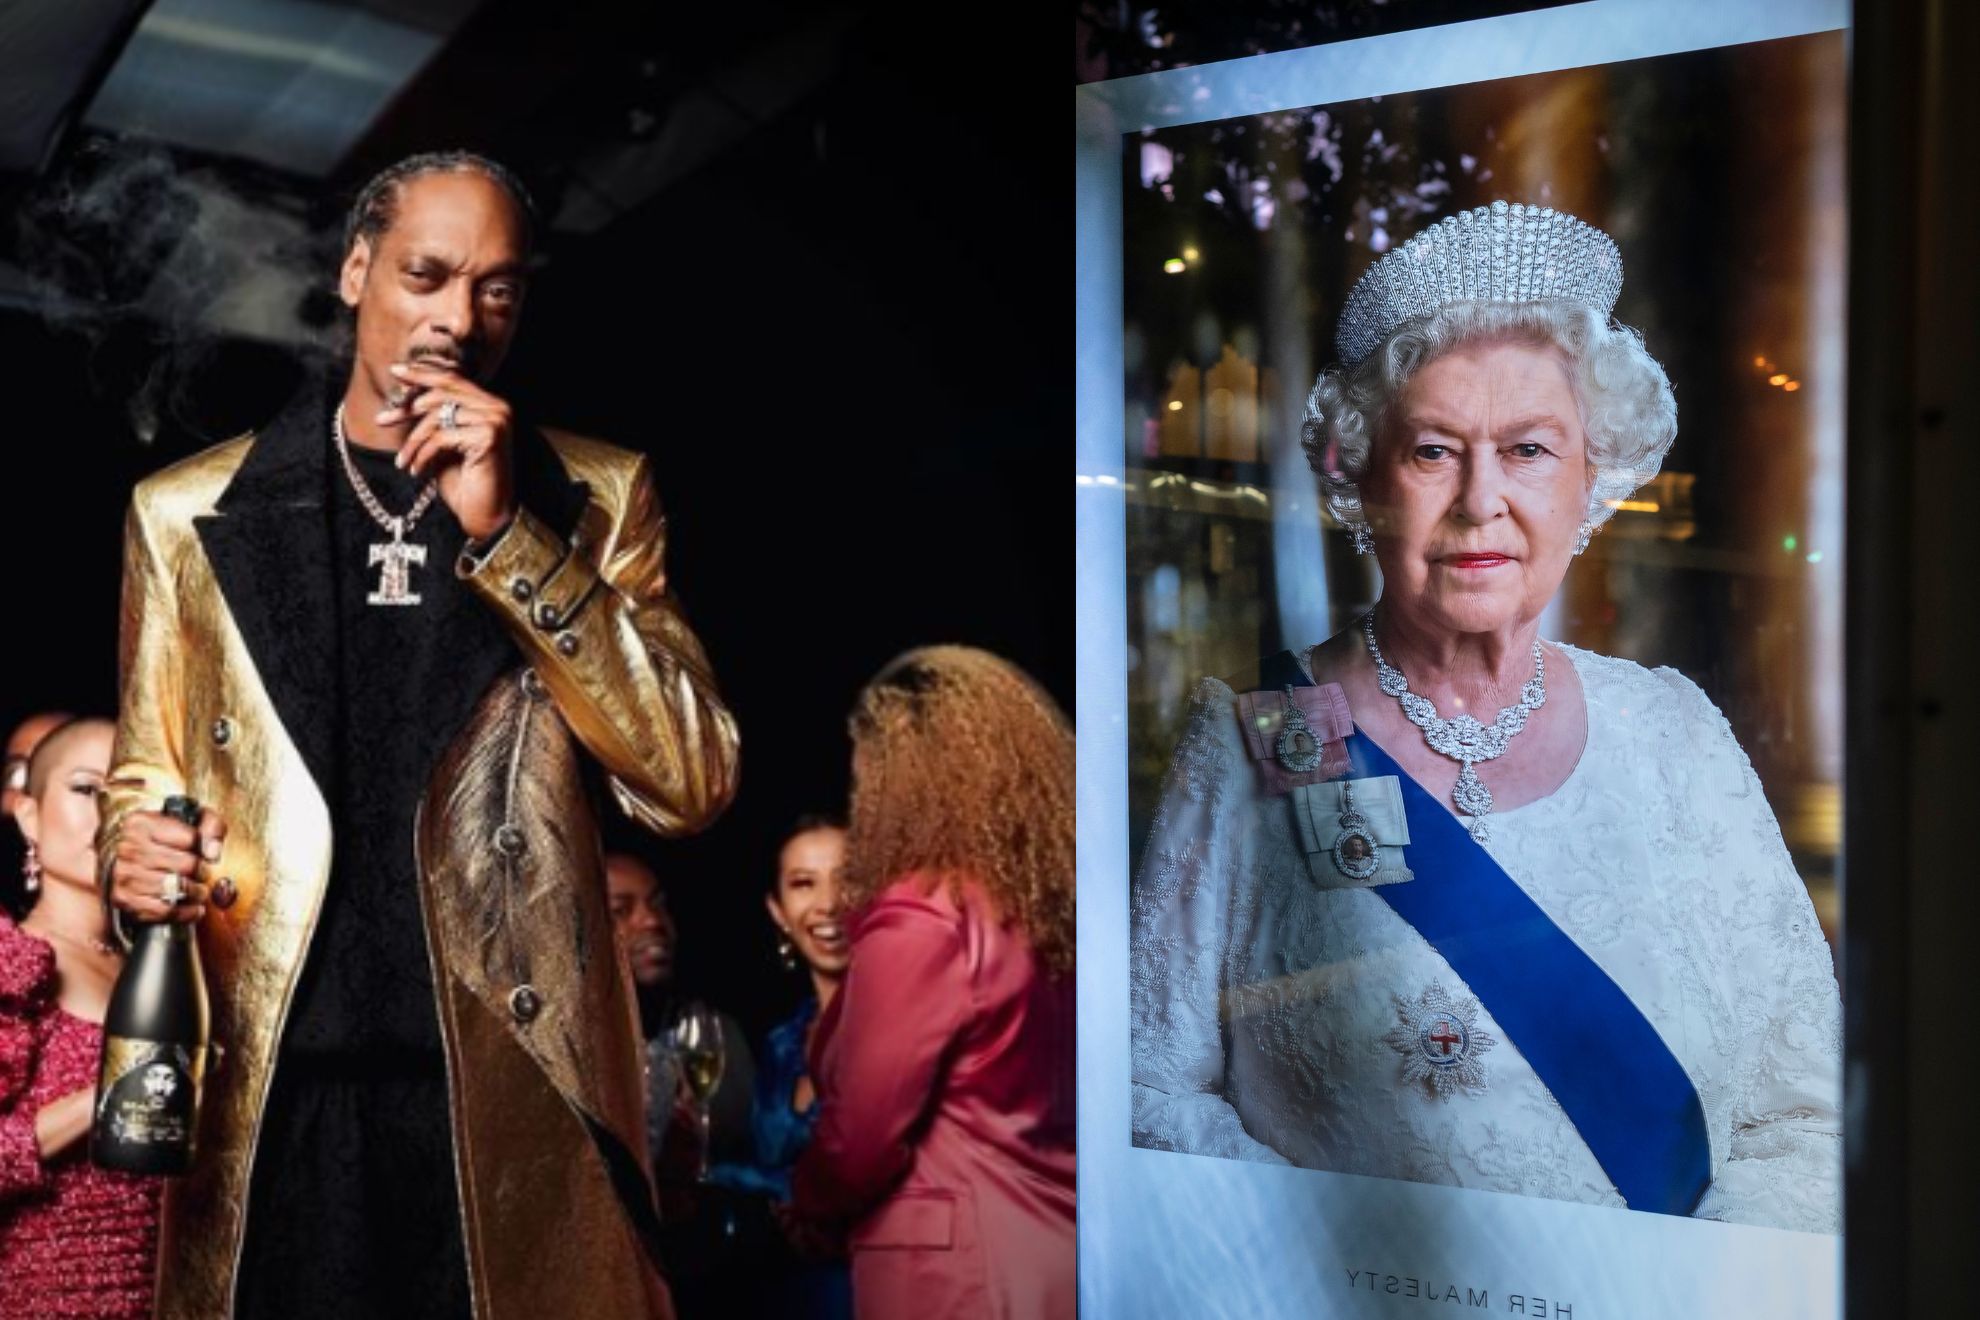 Snoop Dogg (left) / @snoopdogg - Twitter and Queen Elizabeth II (right) / AP